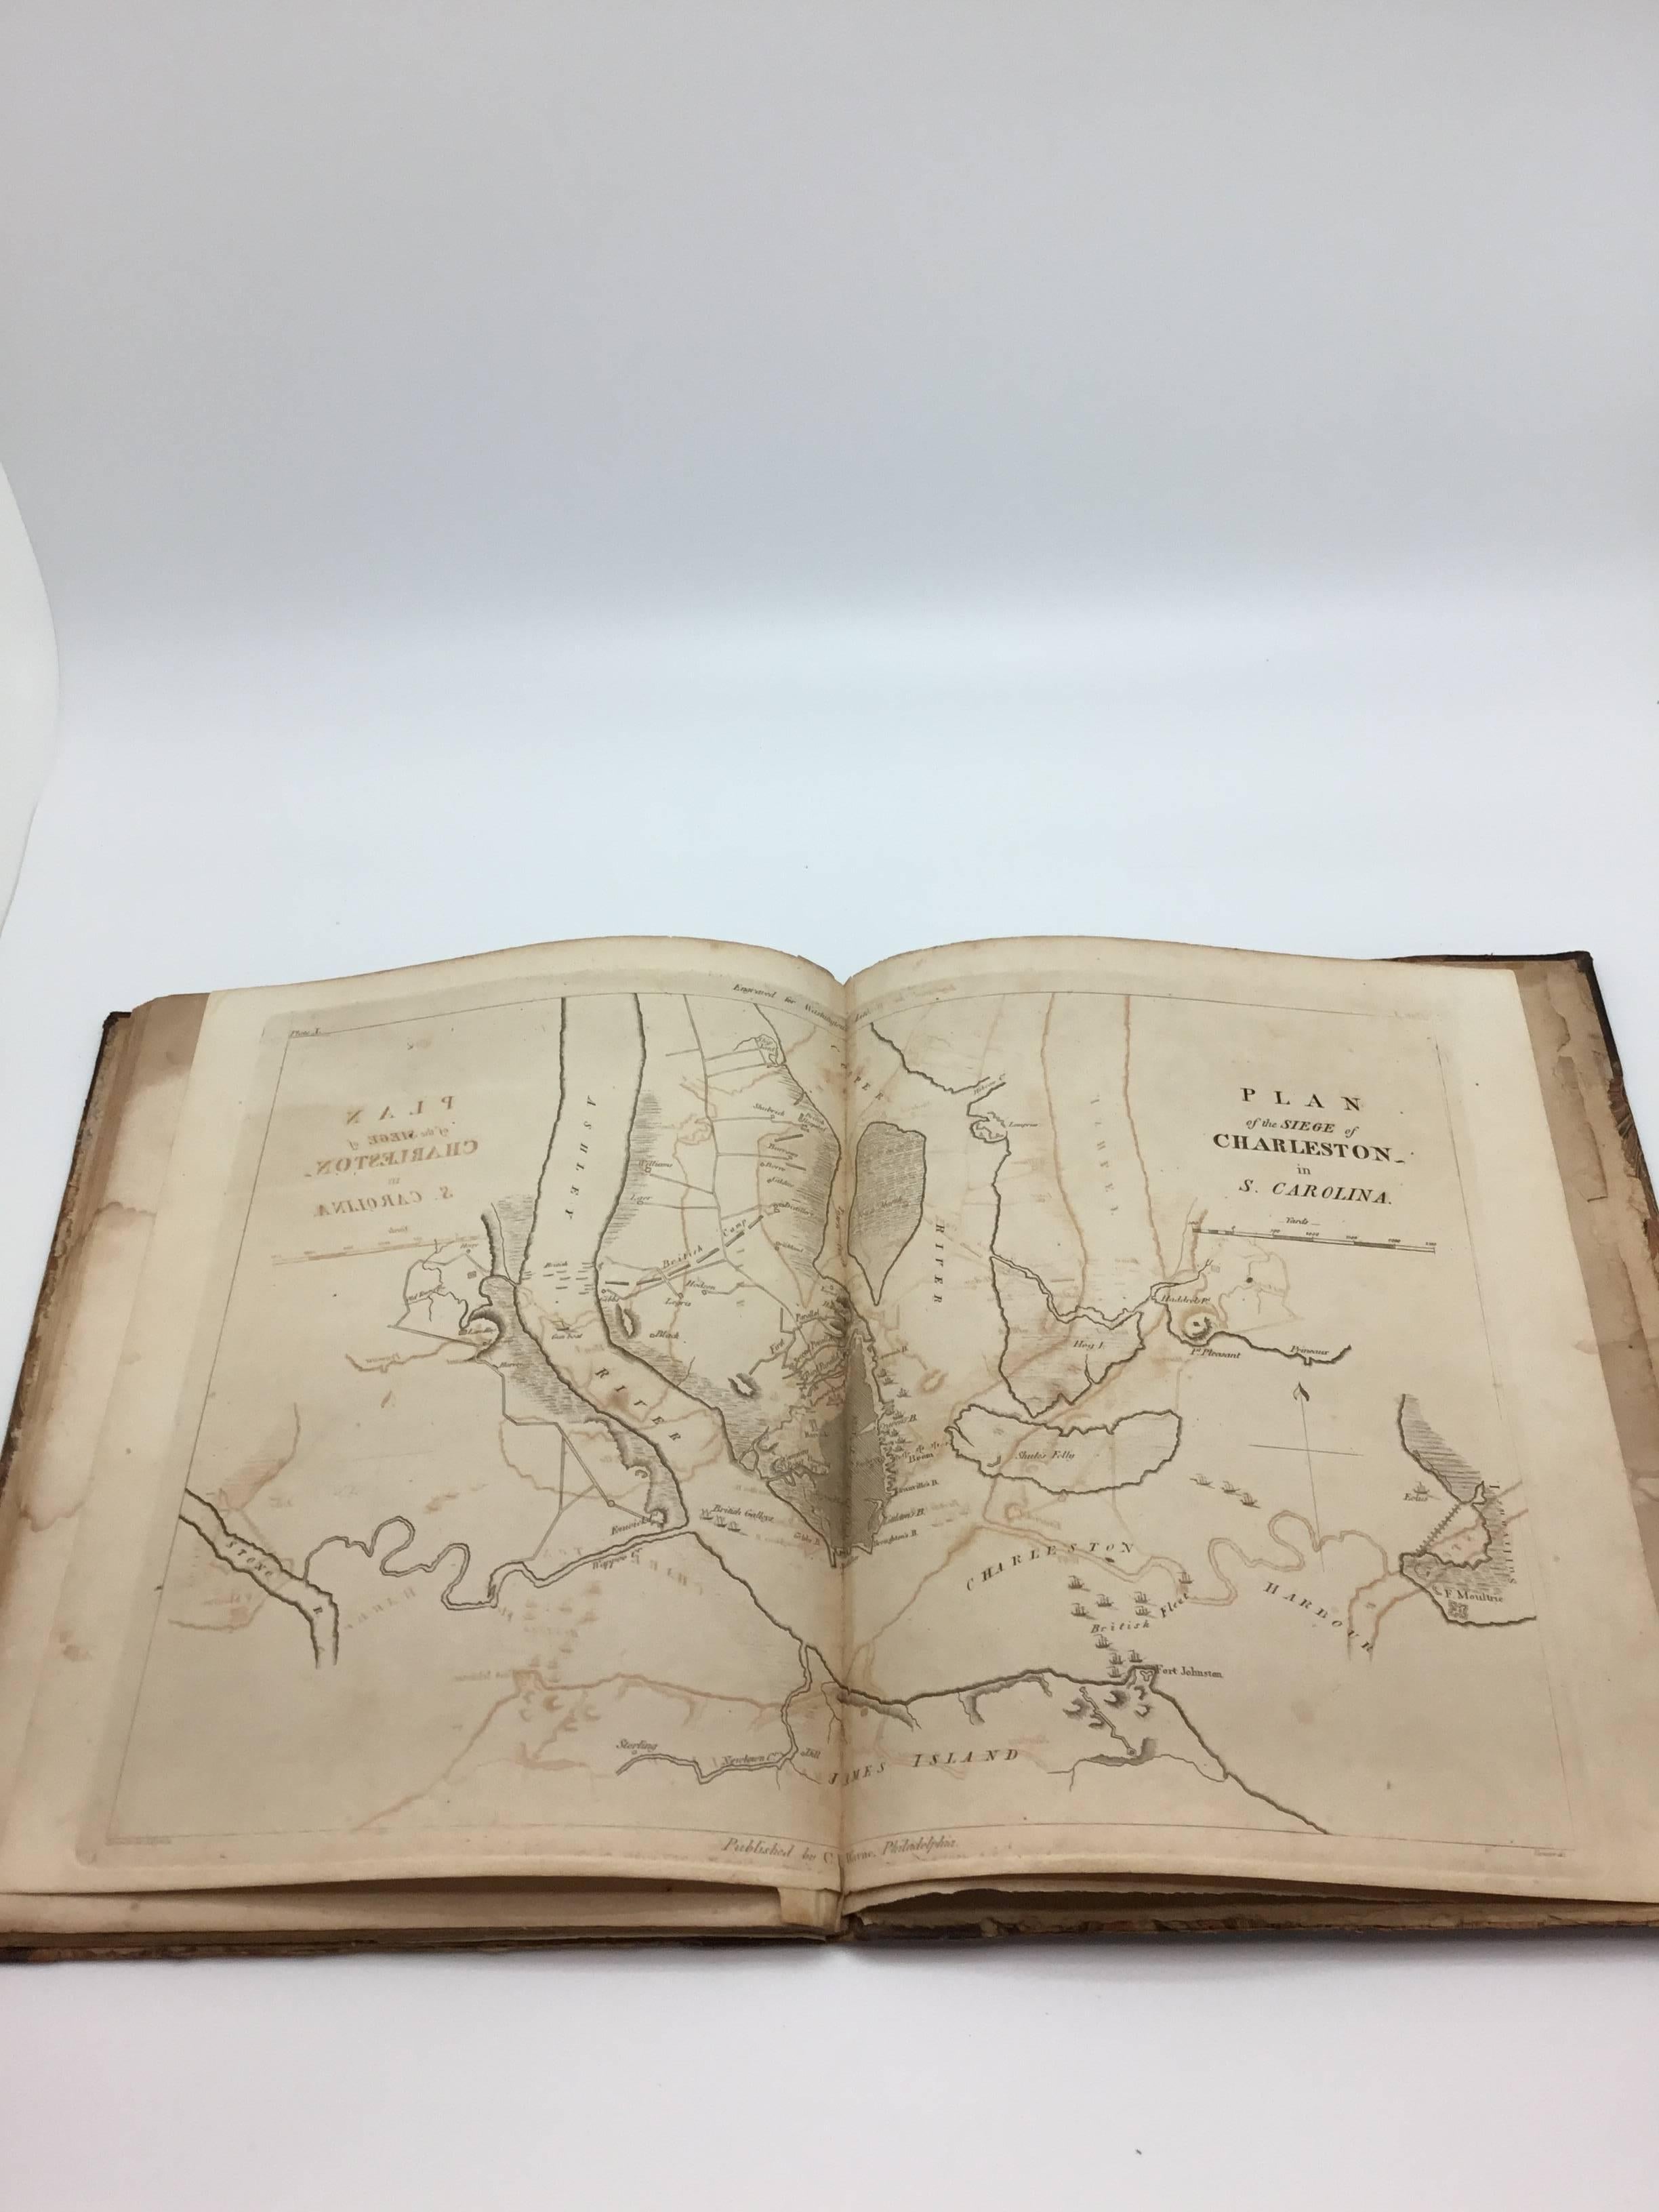 American Life of George Washington by John Marshall, 6-Volumes with Atlas, Circa 1804-07 